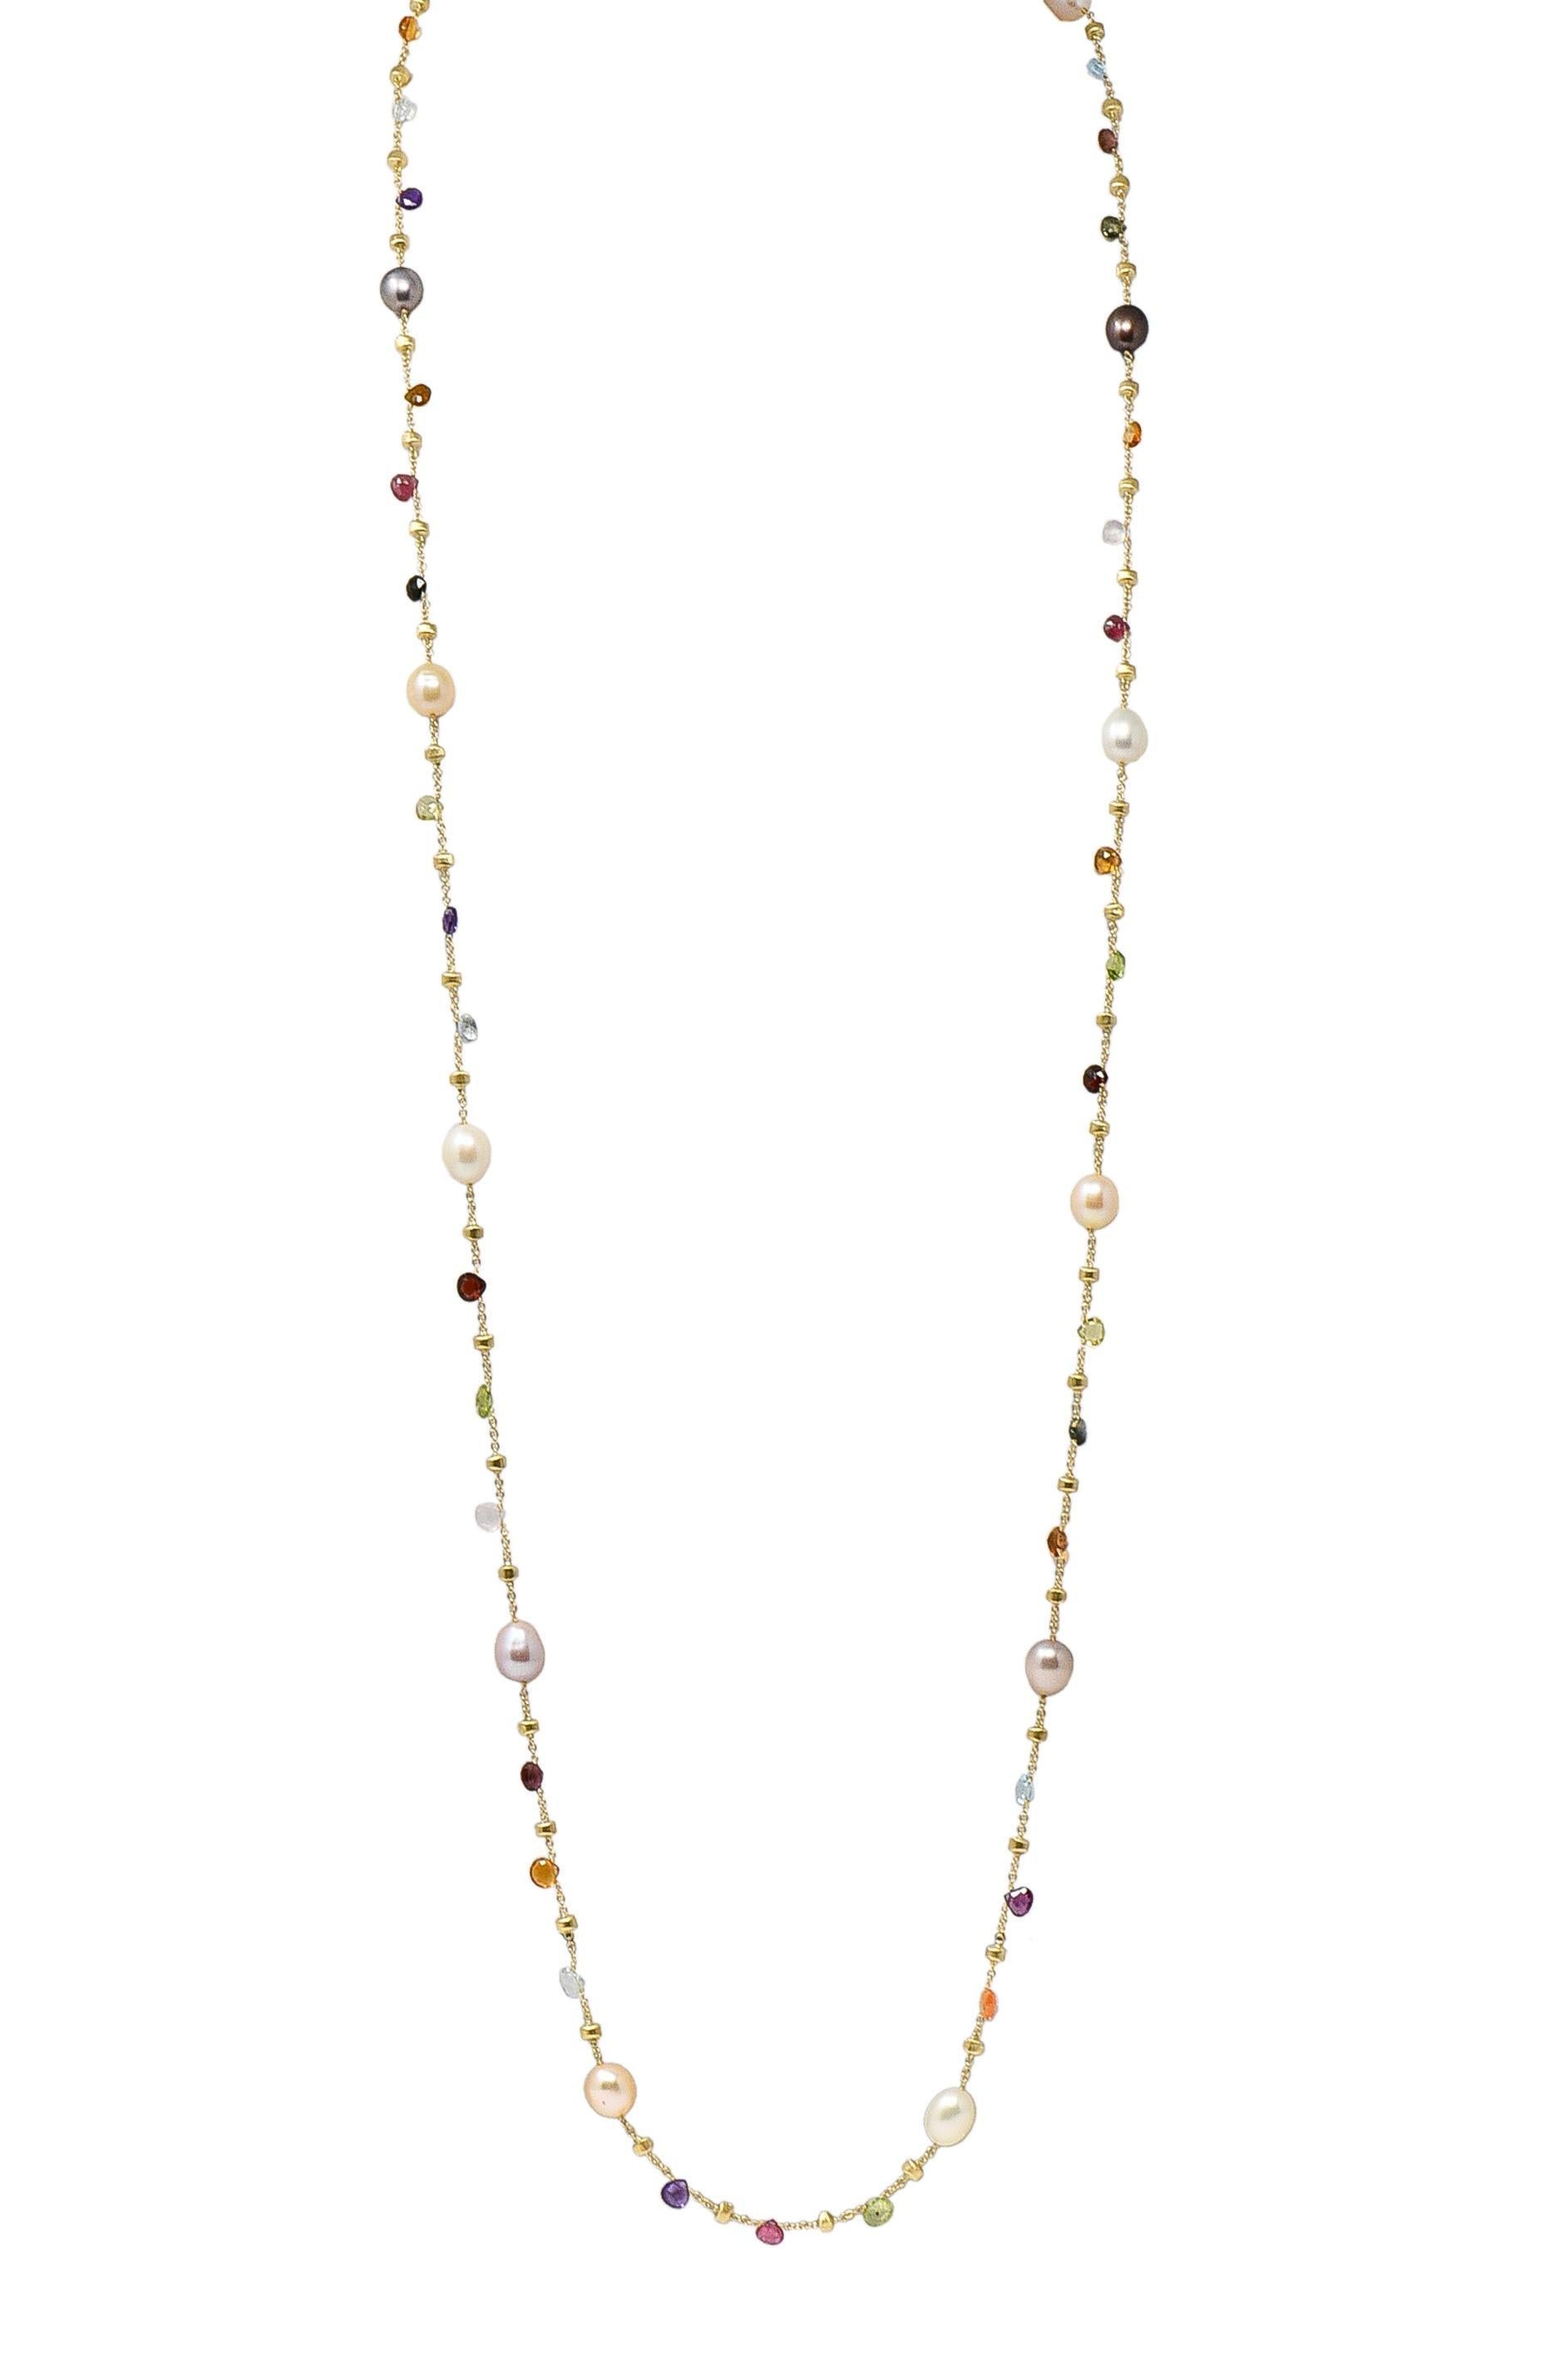 Briolette Cut Marco Bicego Cultured Pearl Multi-Gem 18 Karat Yellow Gold Confetti Necklace For Sale